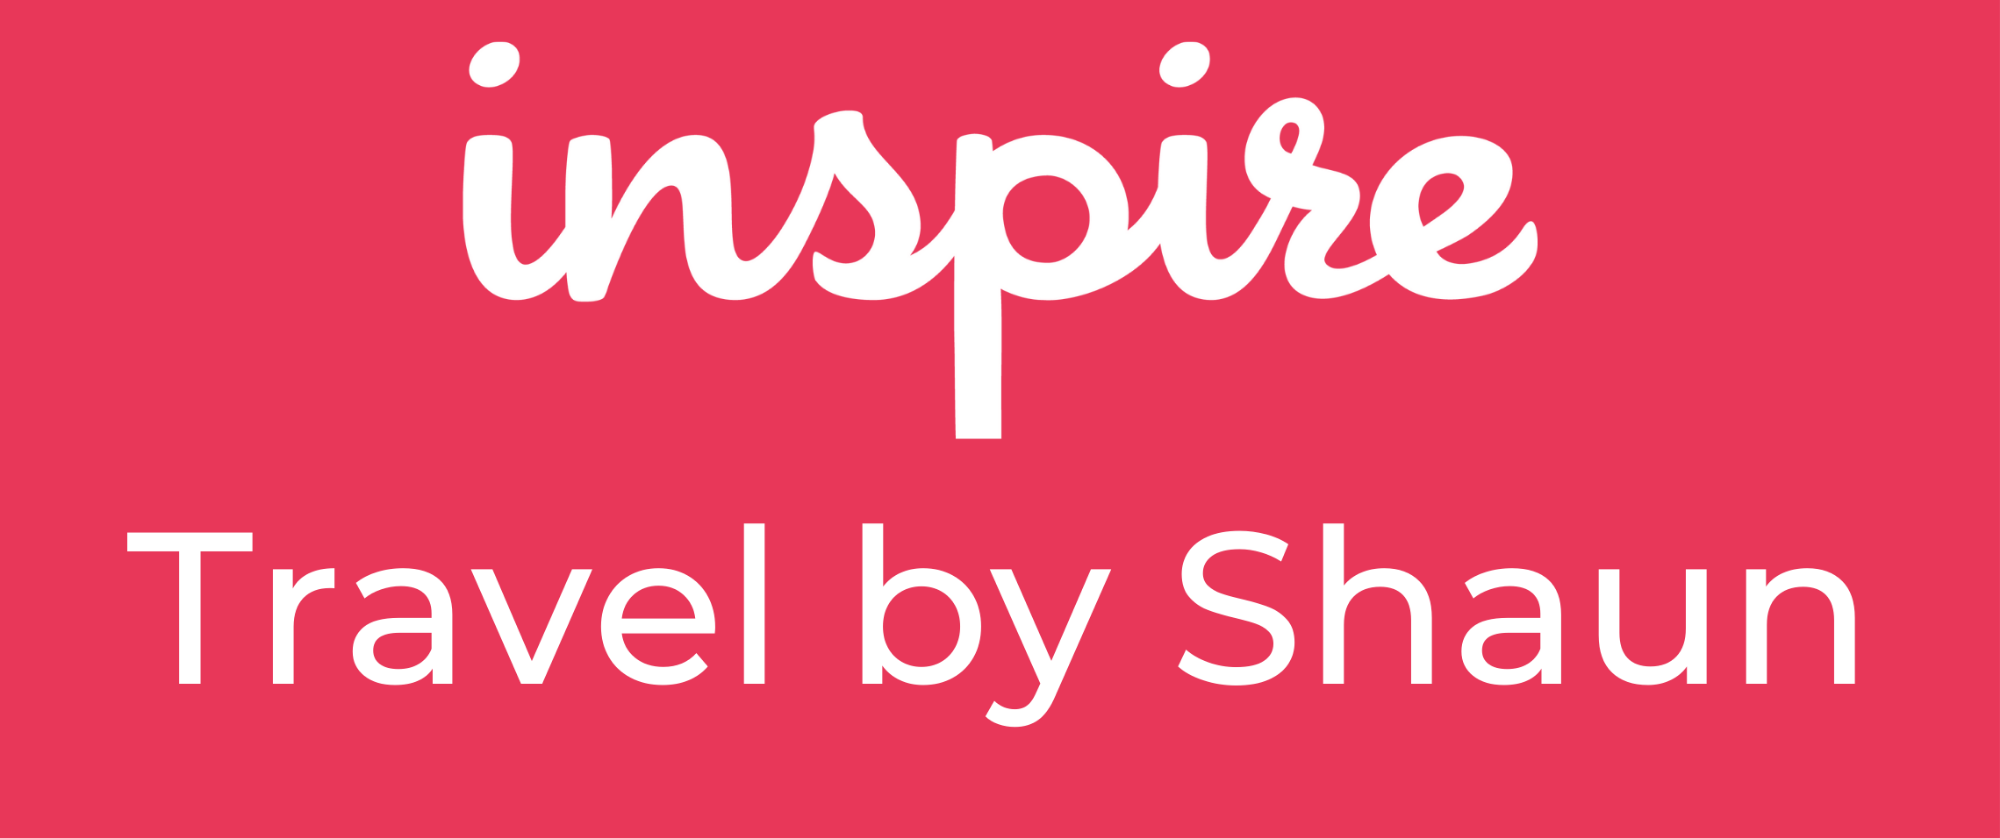 inspire travel by shaun